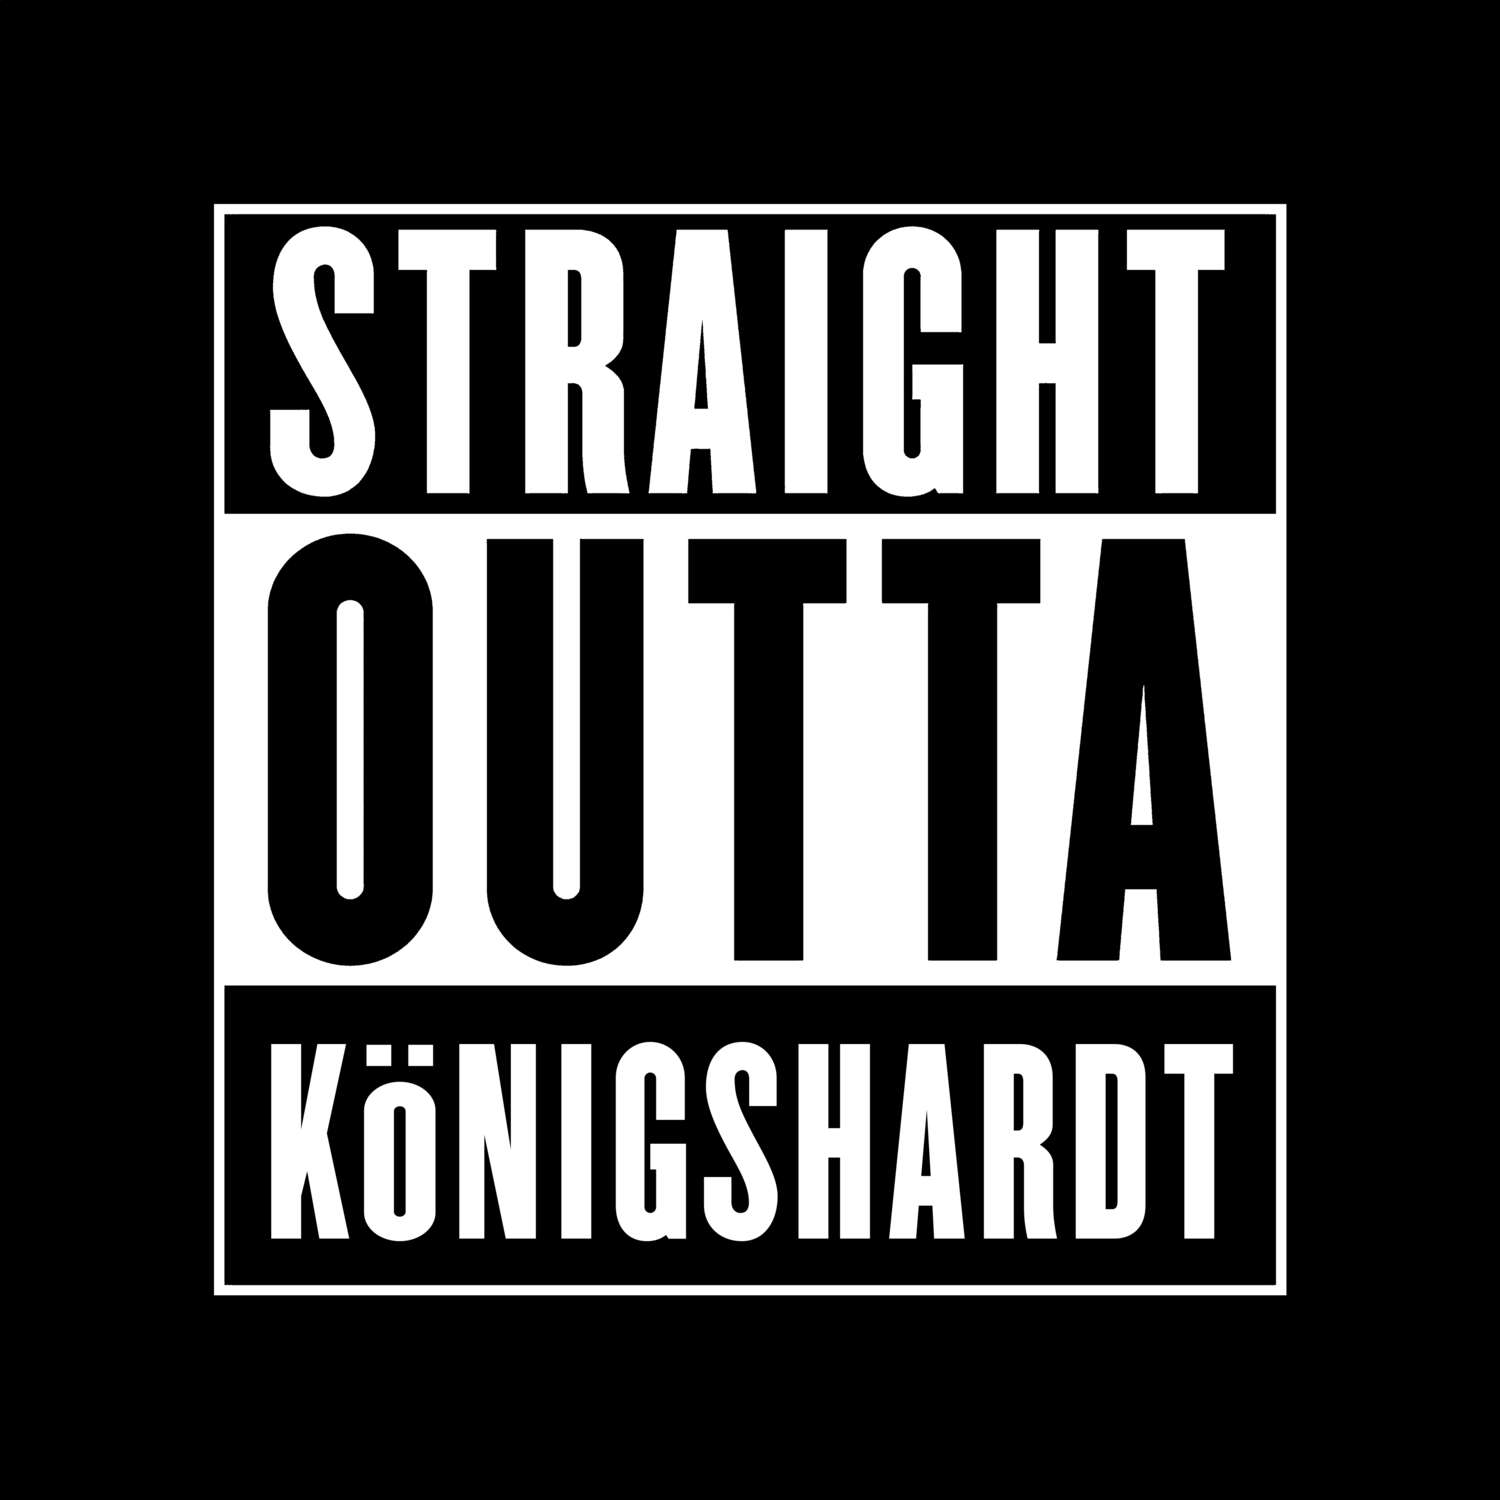 Königshardt T-Shirt »Straight Outta«